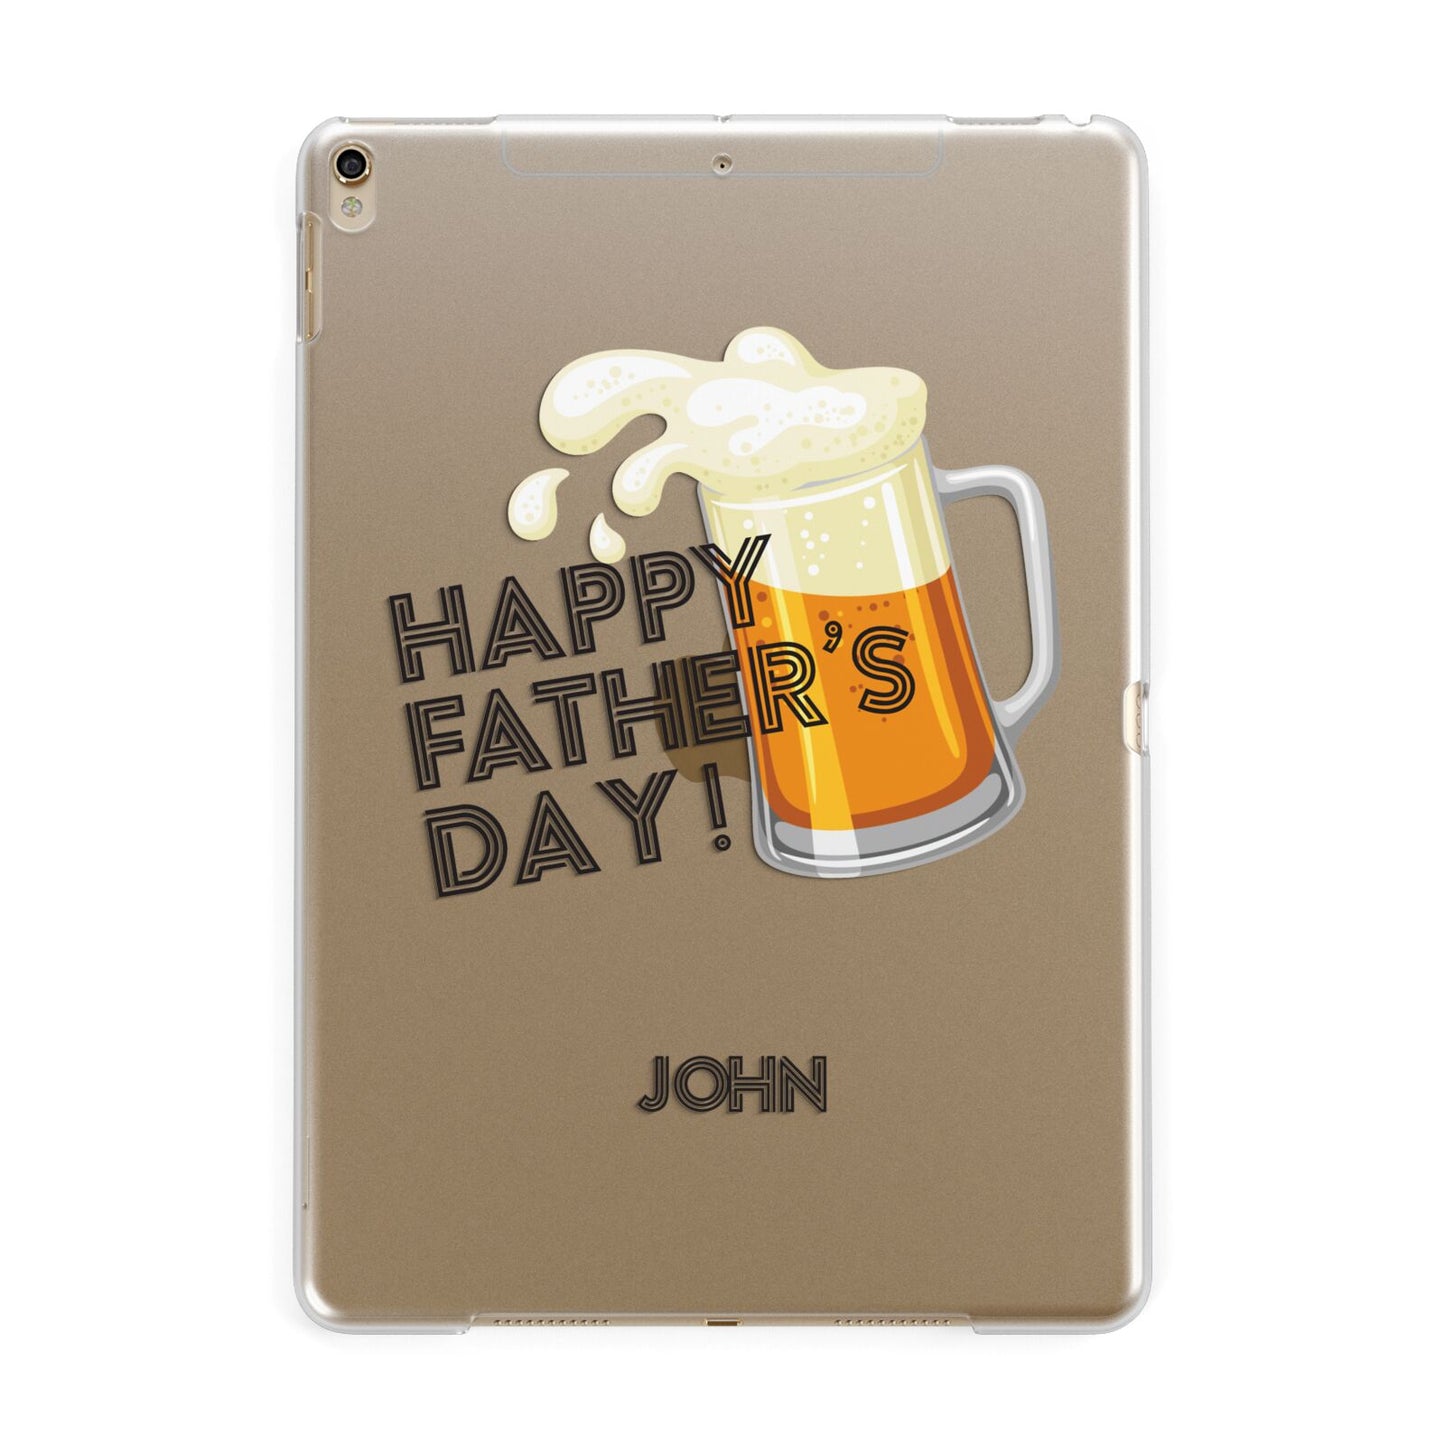 Fathers Day Custom Apple iPad Gold Case